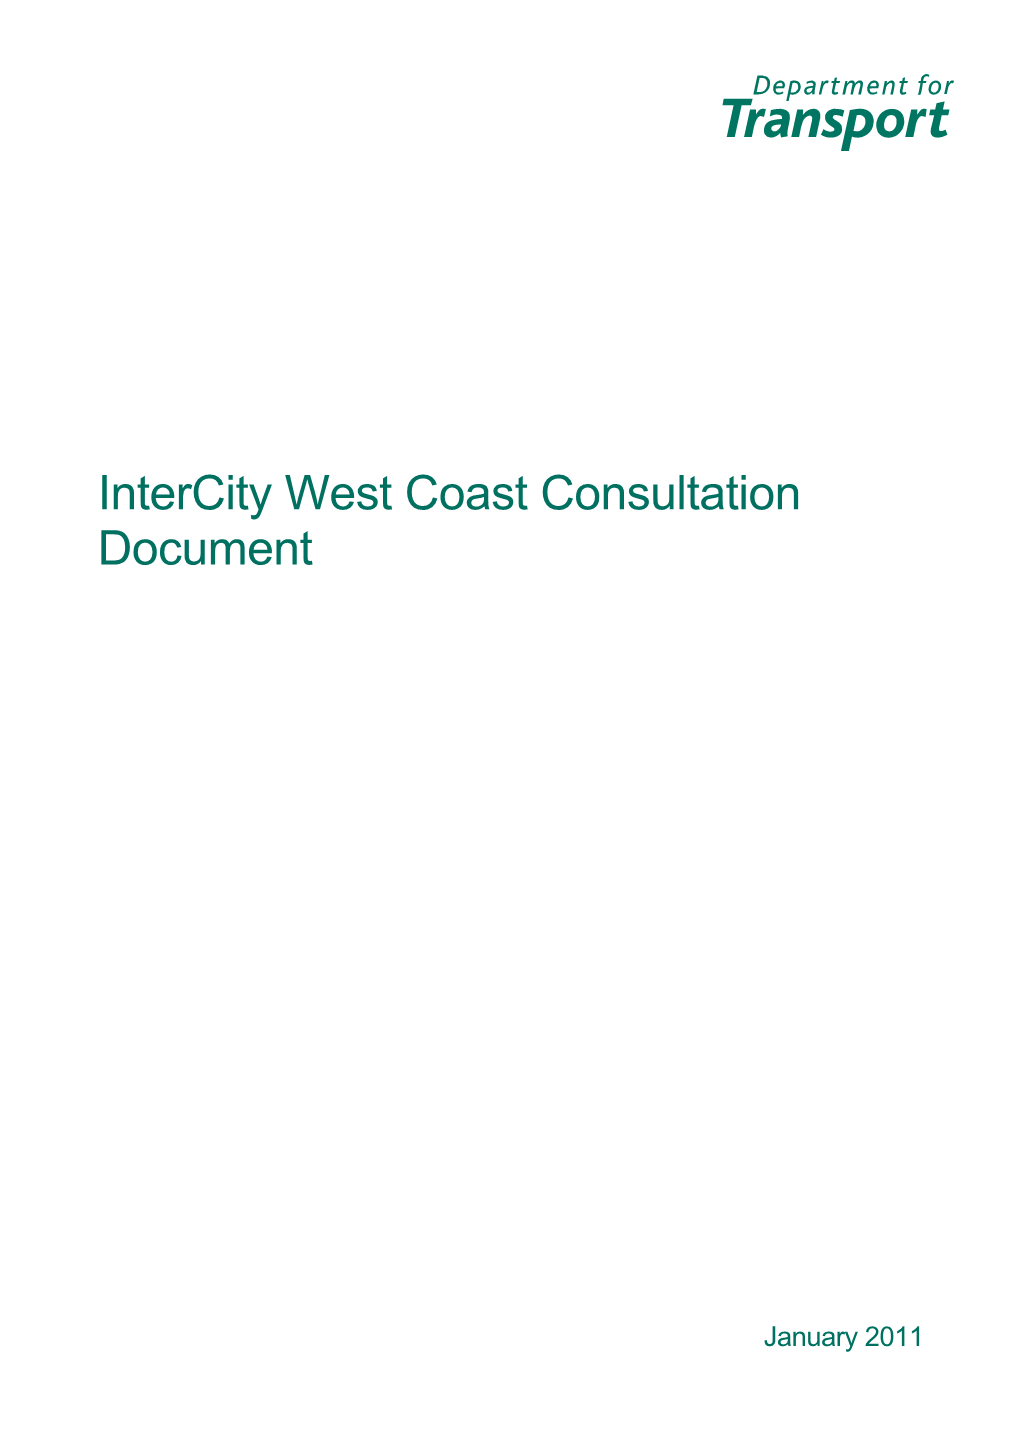 Intercity West Coast Consultation Document